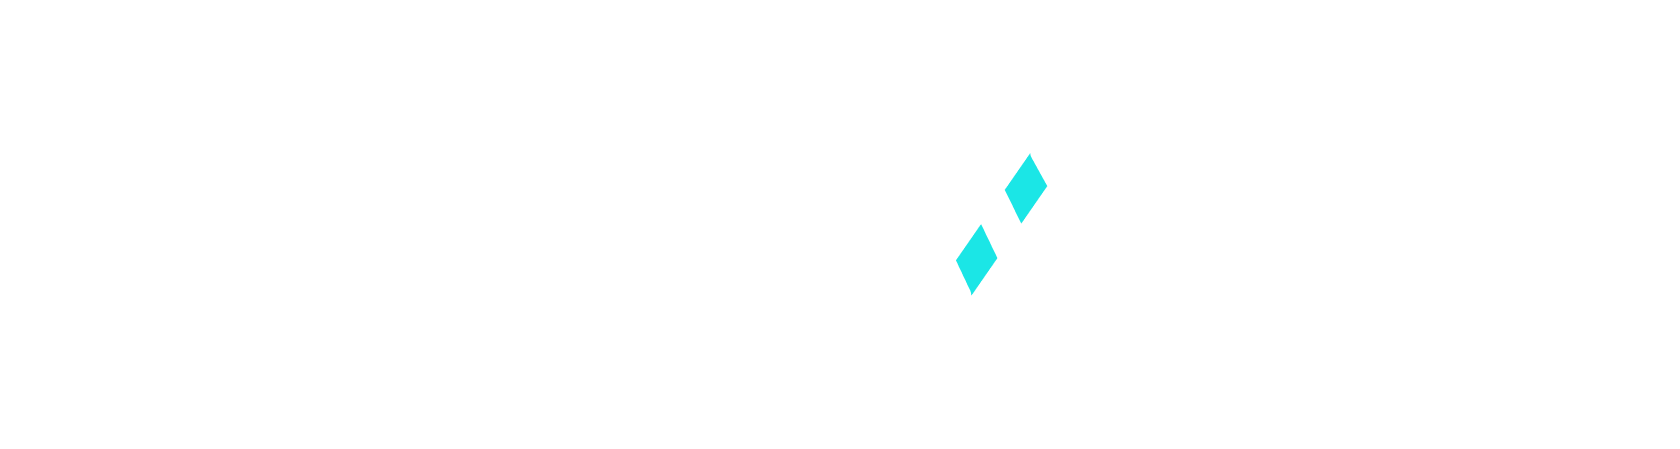 Openware logo